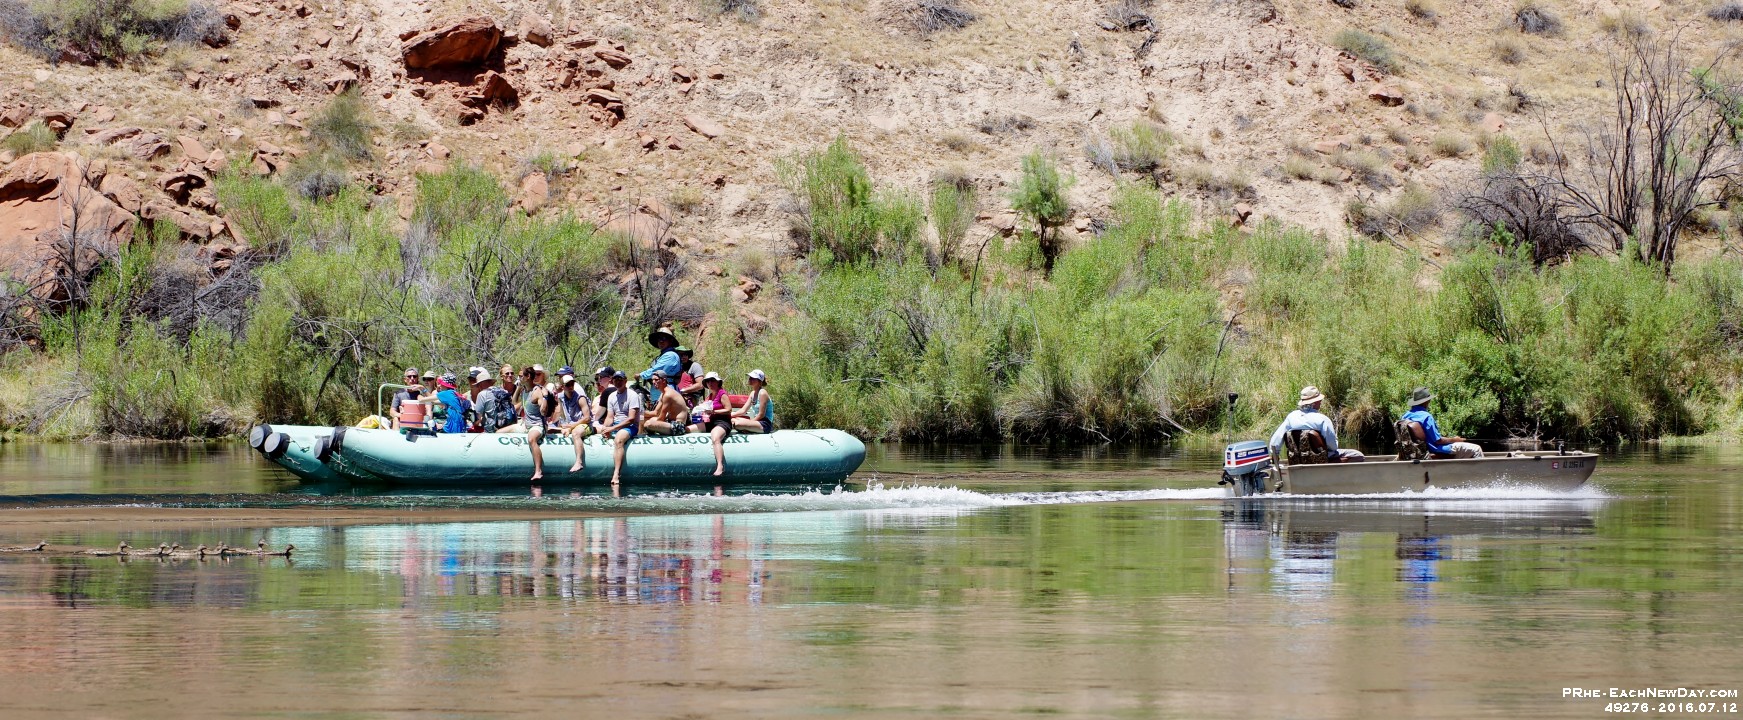 49276CrExDe - Rafting the Colorado, Glen Canyon Dam to Lee's Ferry